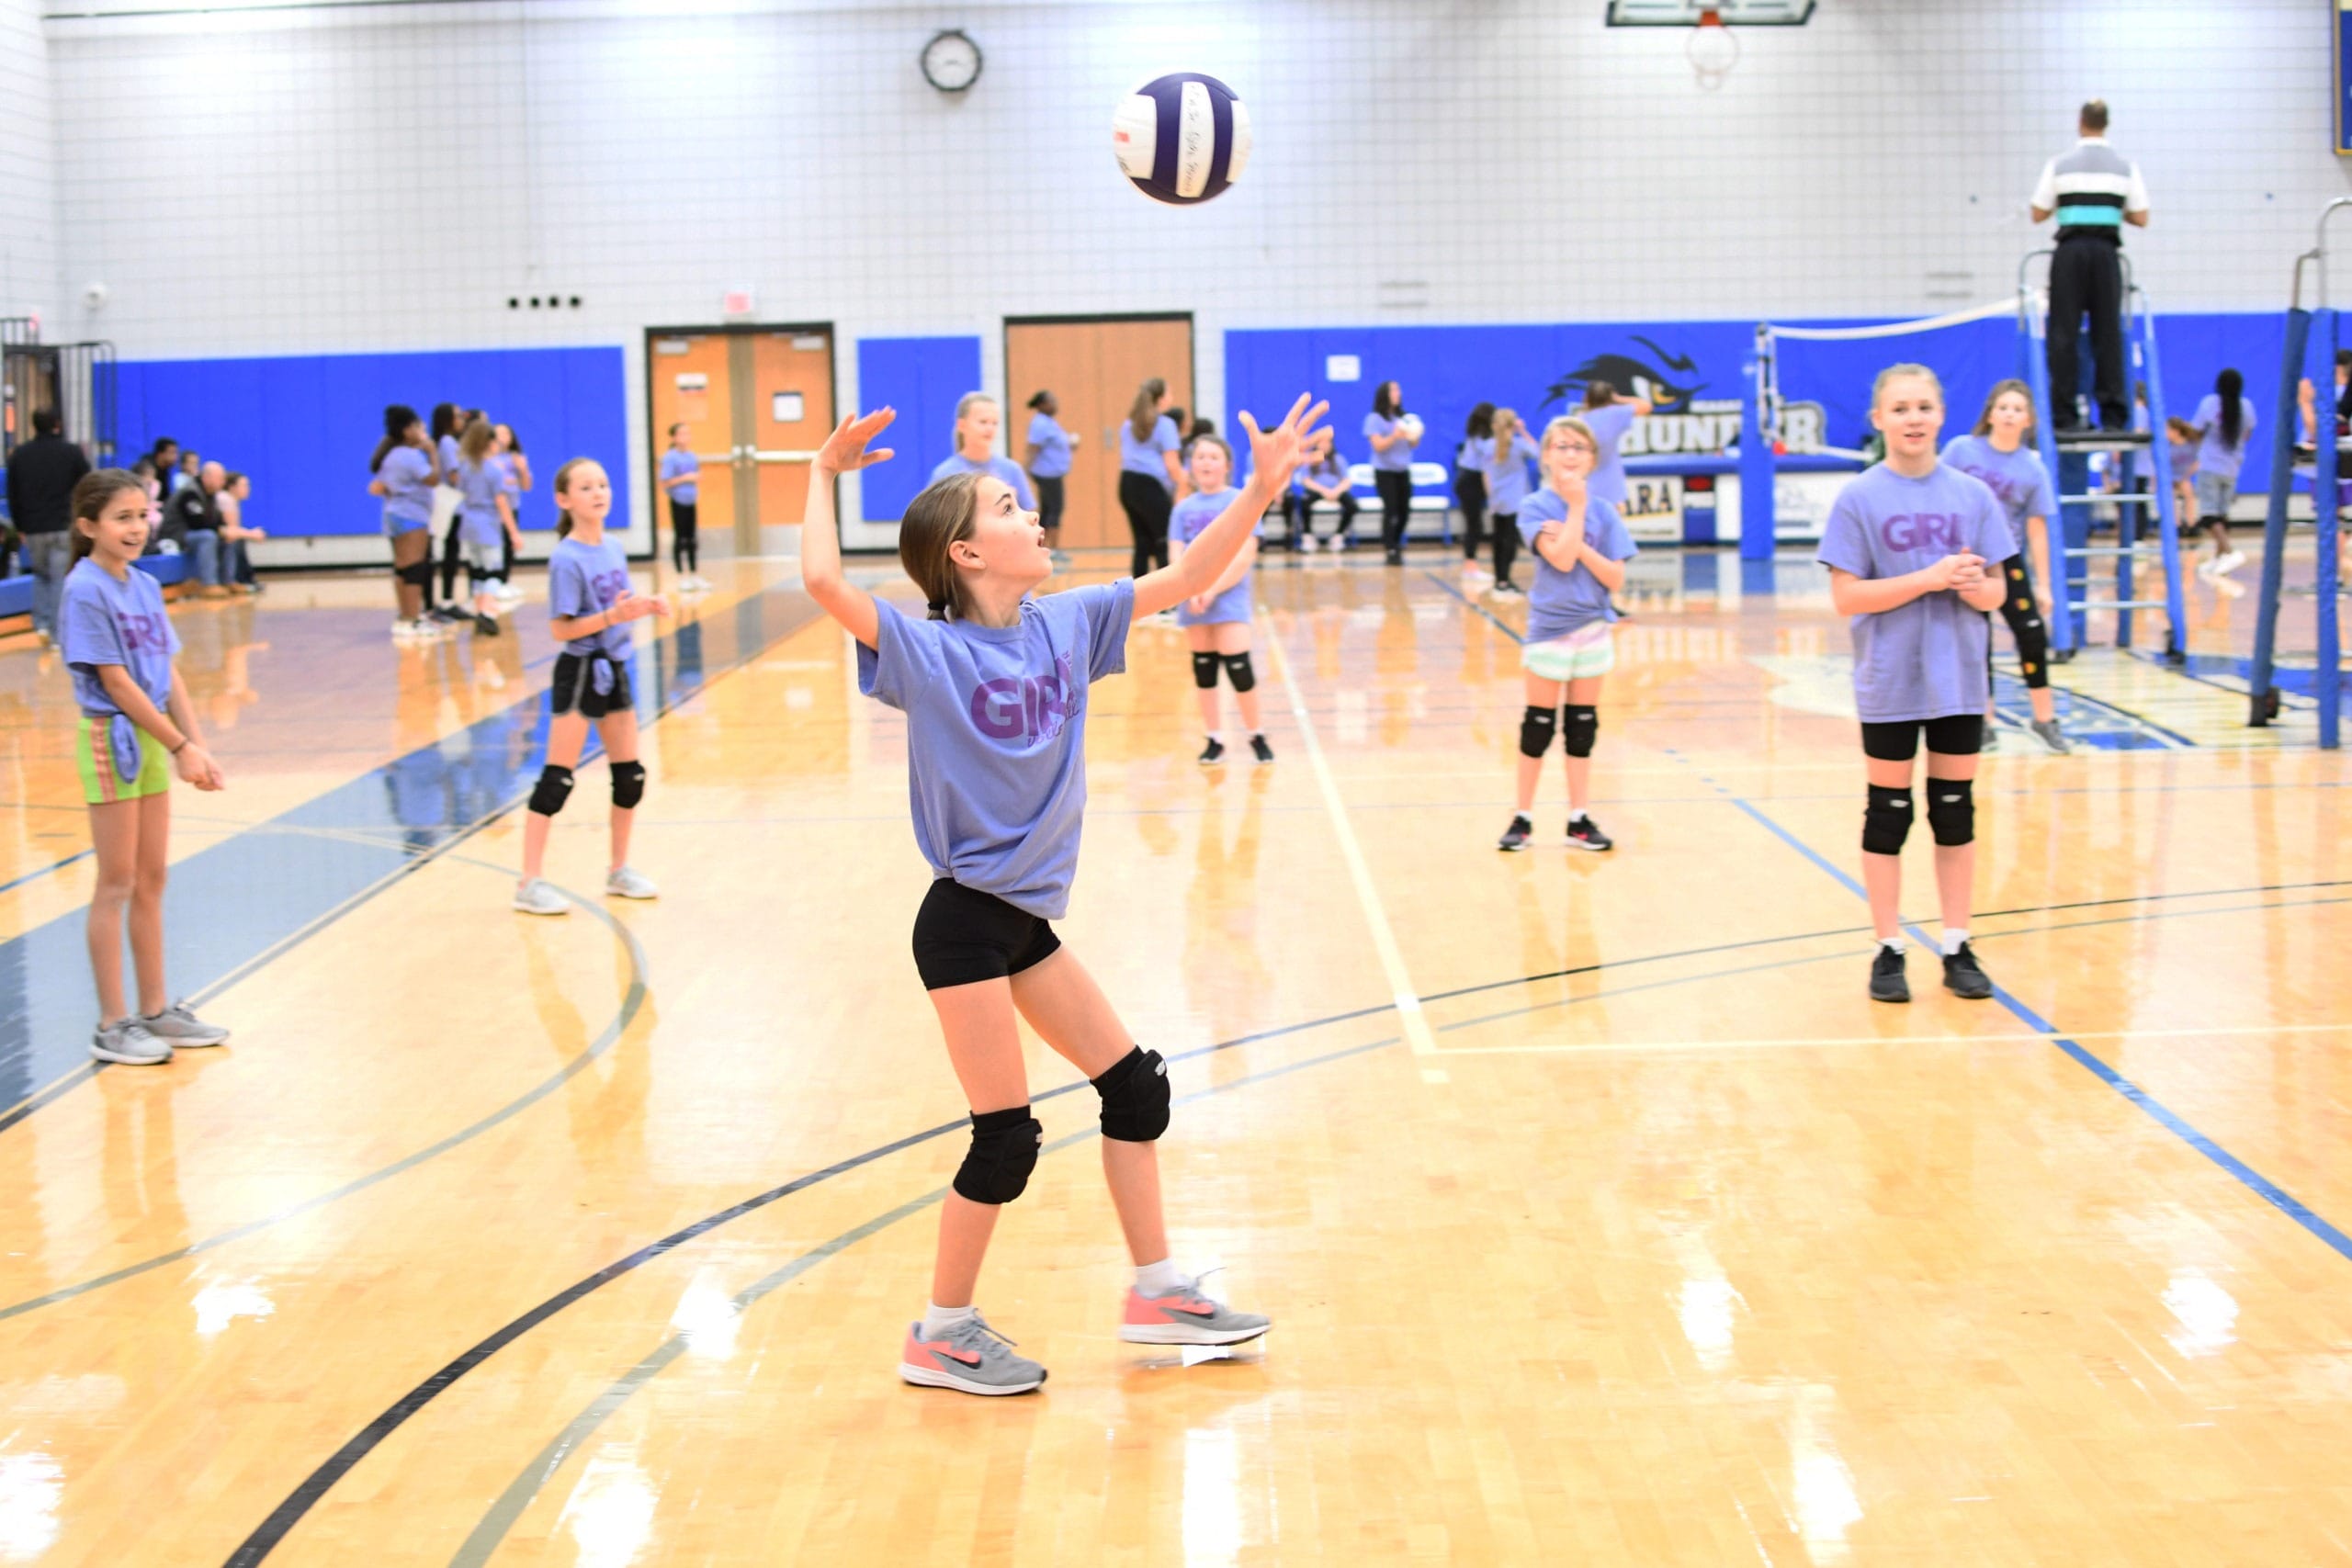 Girl Power Volleyball Tournament Held at SUNY Niagara